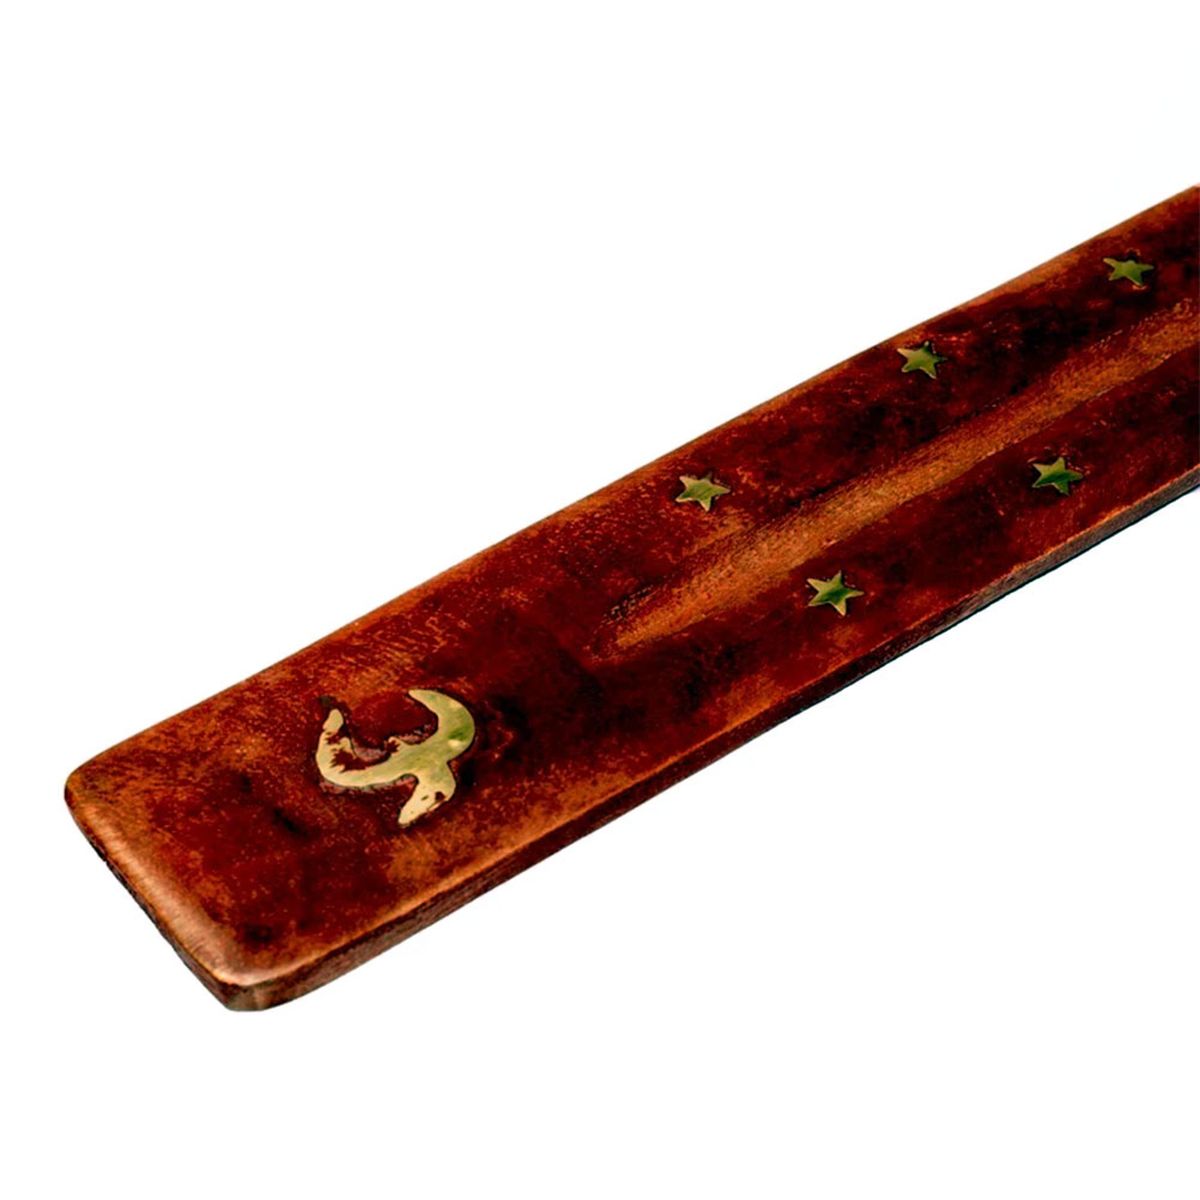 Incense stick holder - OHM